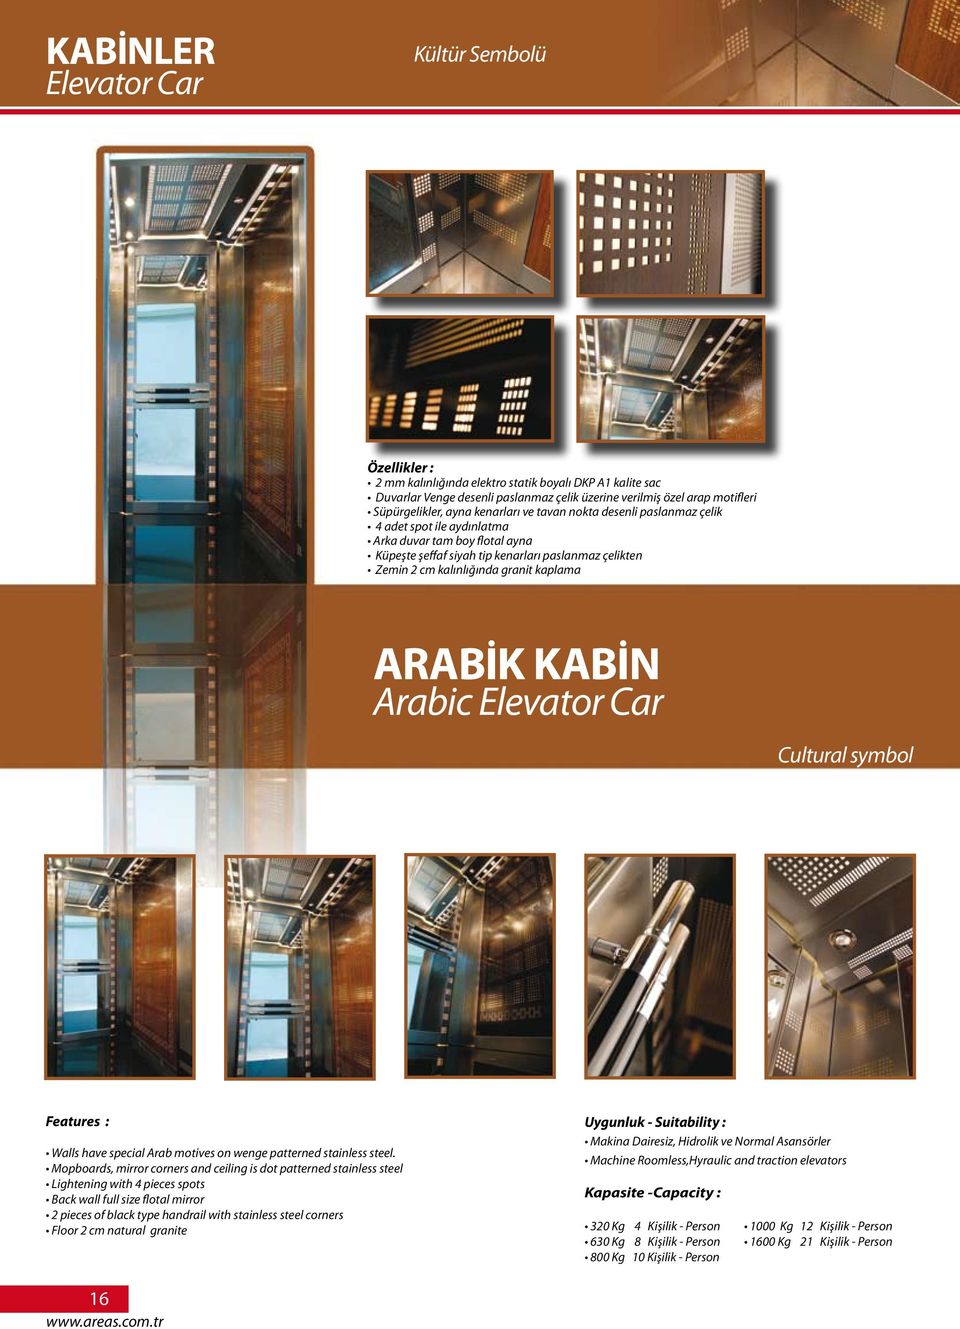 kaplama ARABİK KABİN Arabic Elevator Car Cultural symbol Features : Walls have special Arab motives on wenge patterned stainless steel.